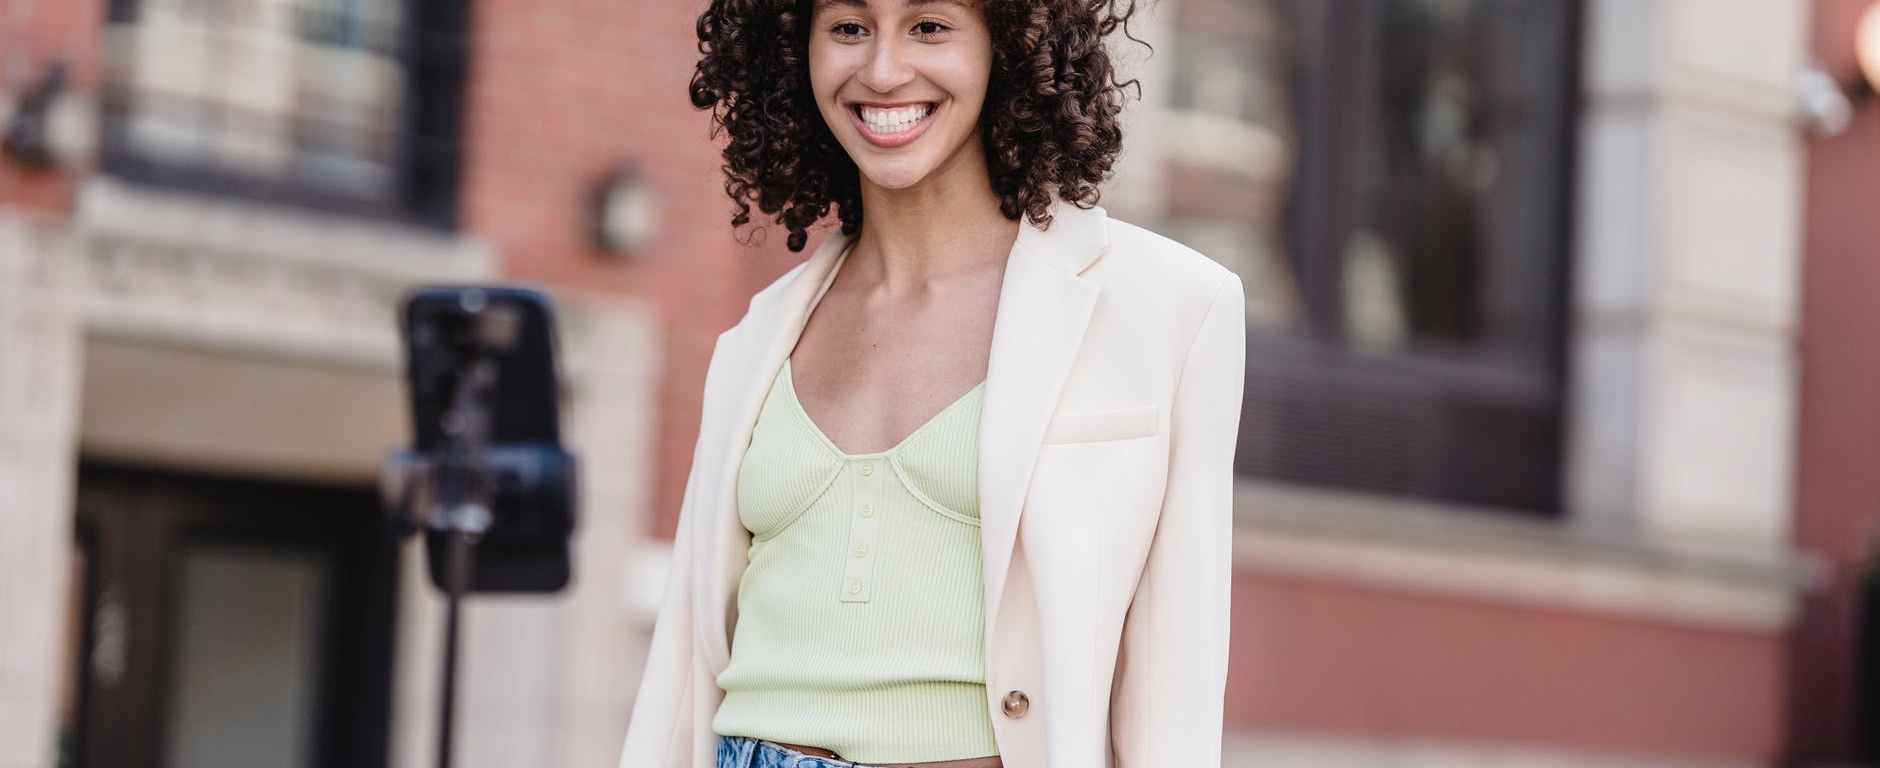 positive ethnic woman in white elegant jacket having online conversation